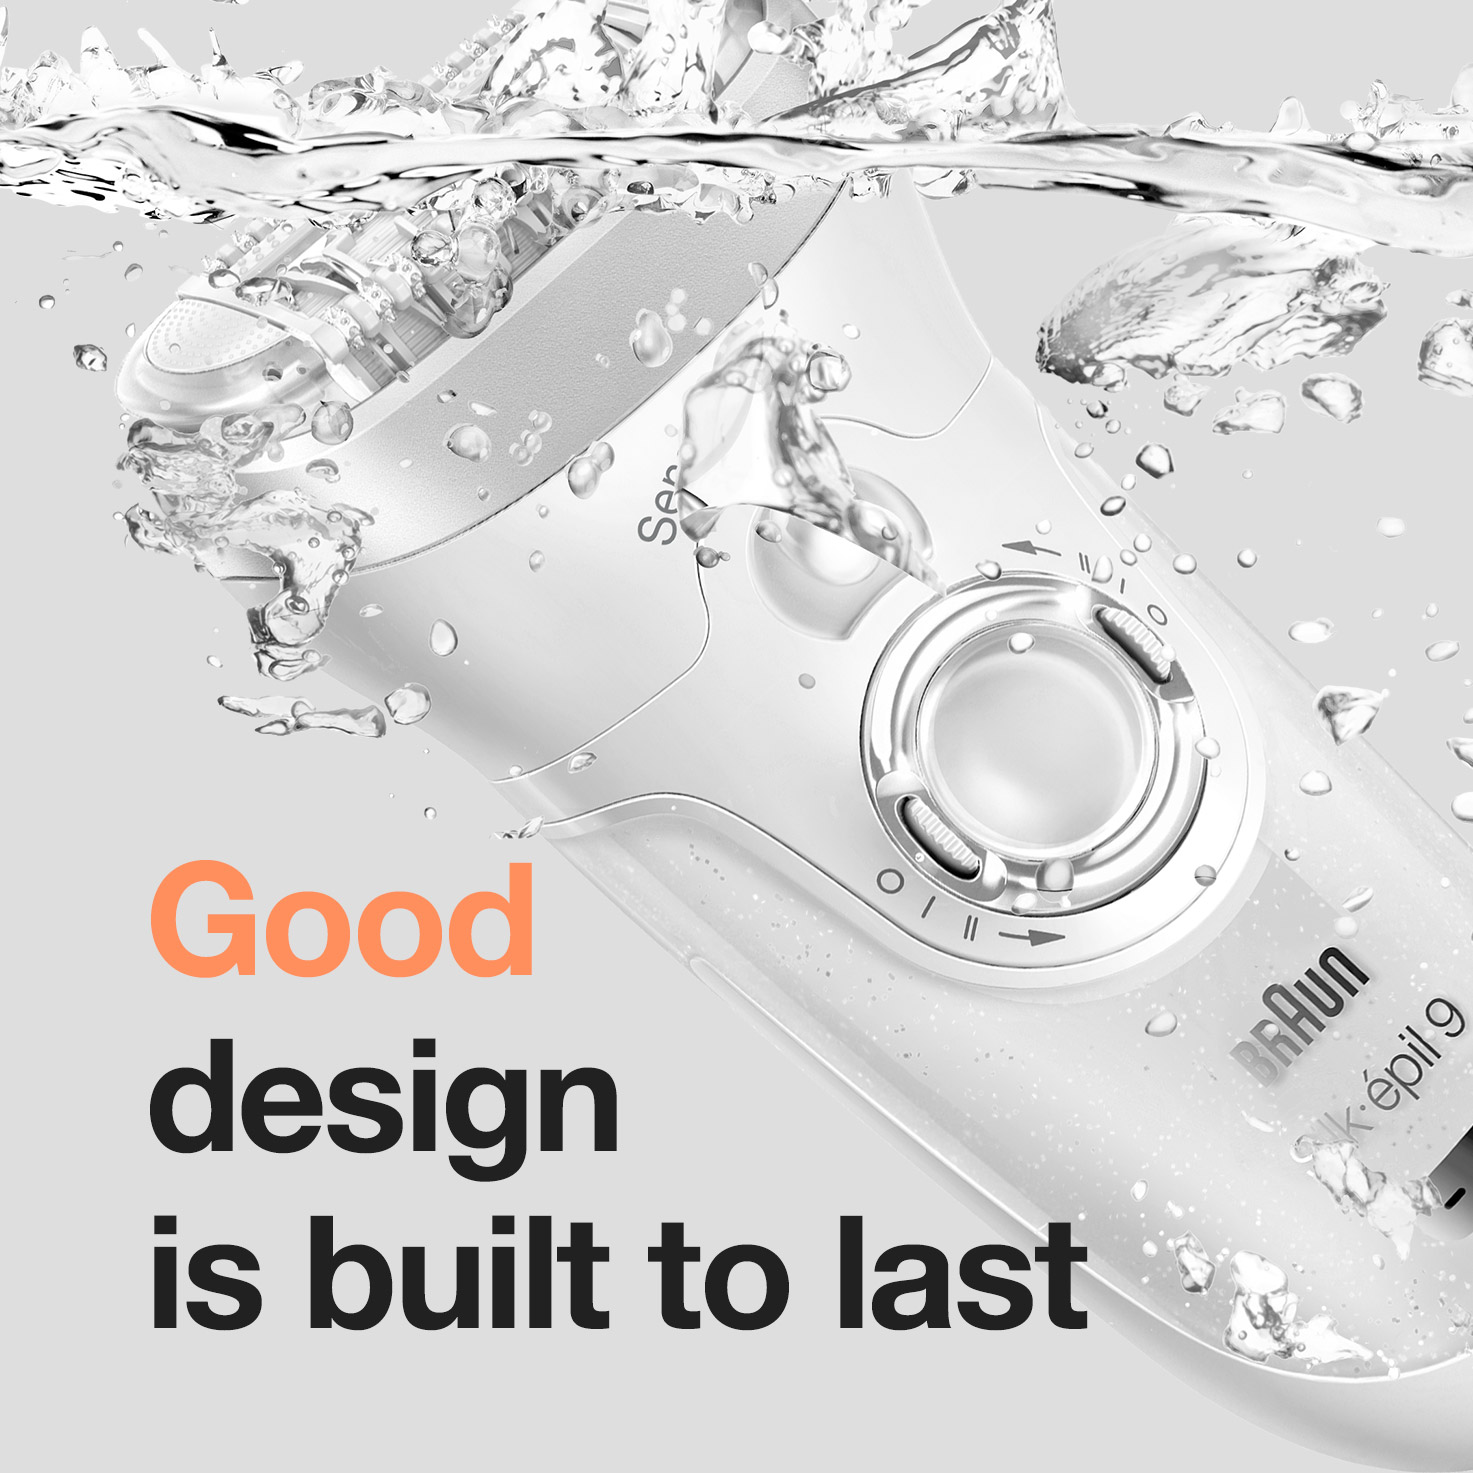 Good design is built to last